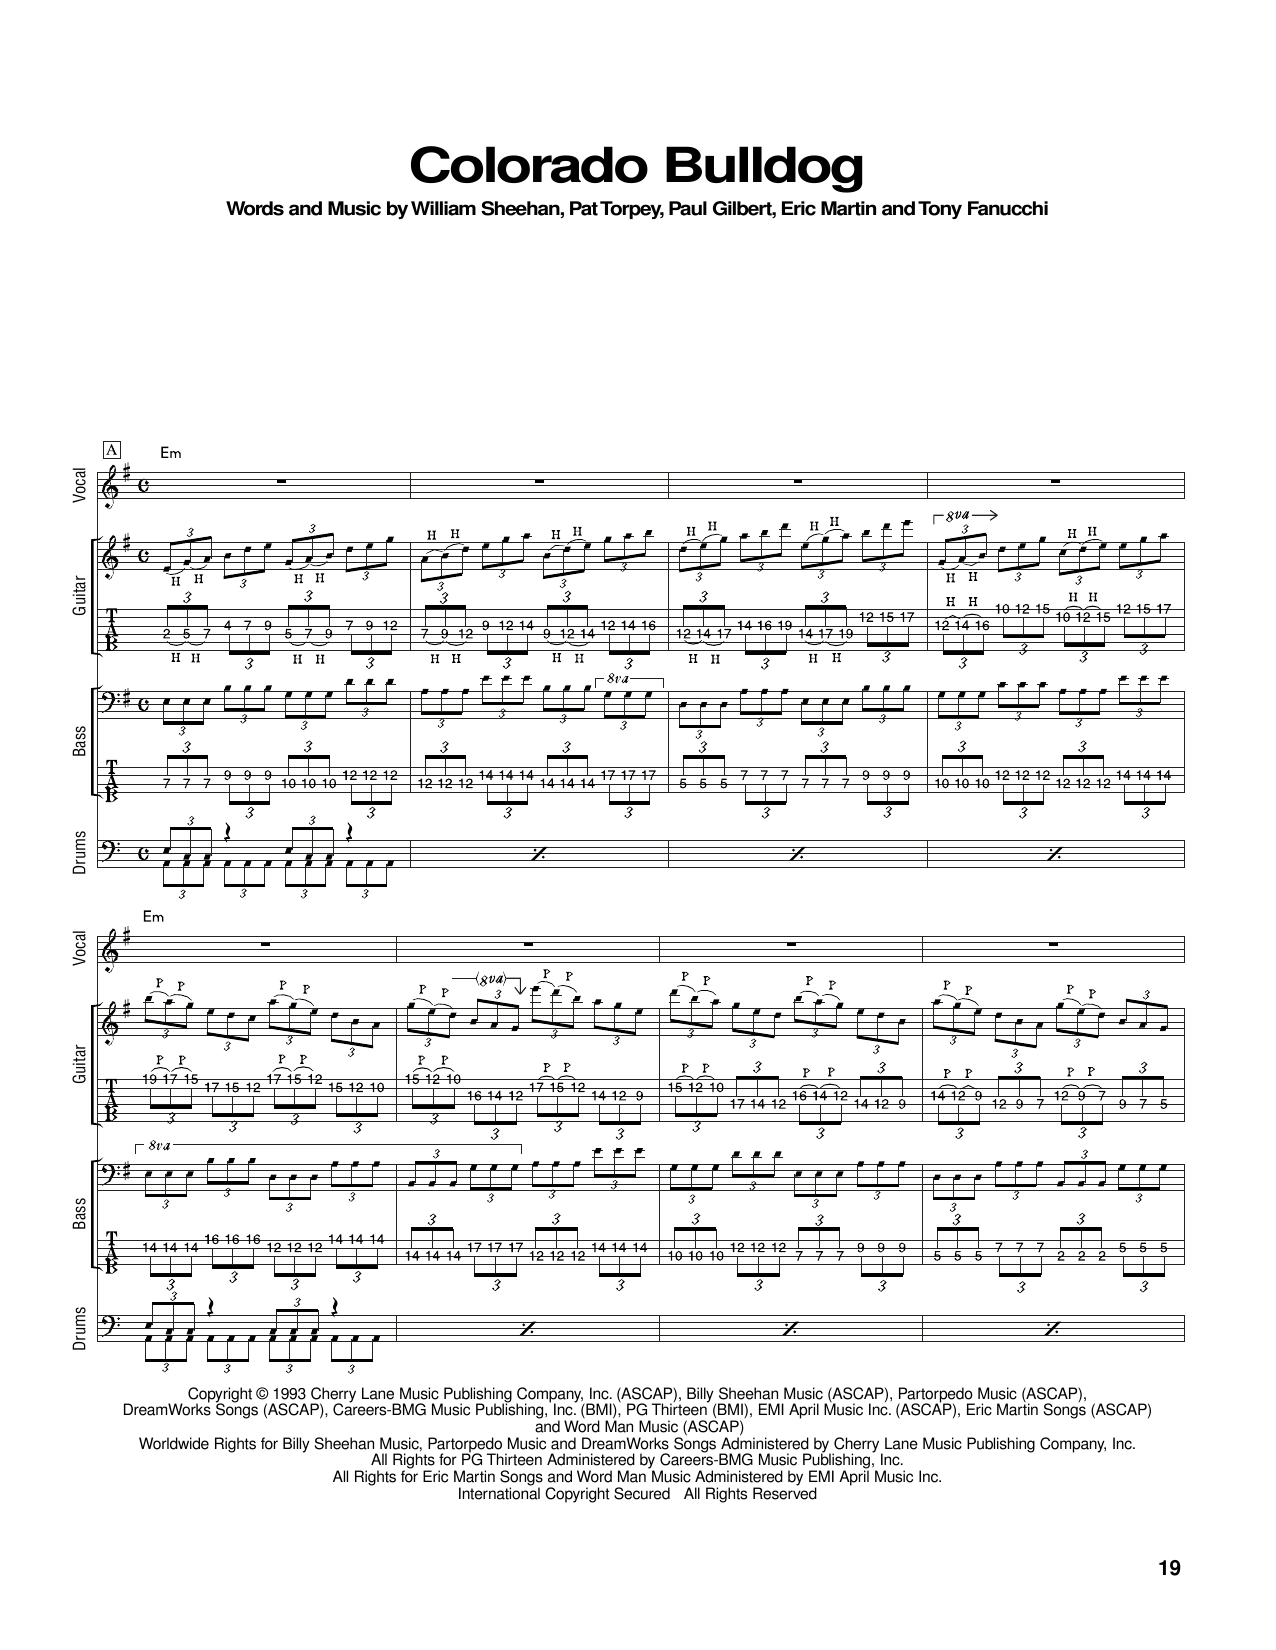 Mr. Big Colorado Bulldog sheet music notes and chords arranged for Bass Guitar Tab